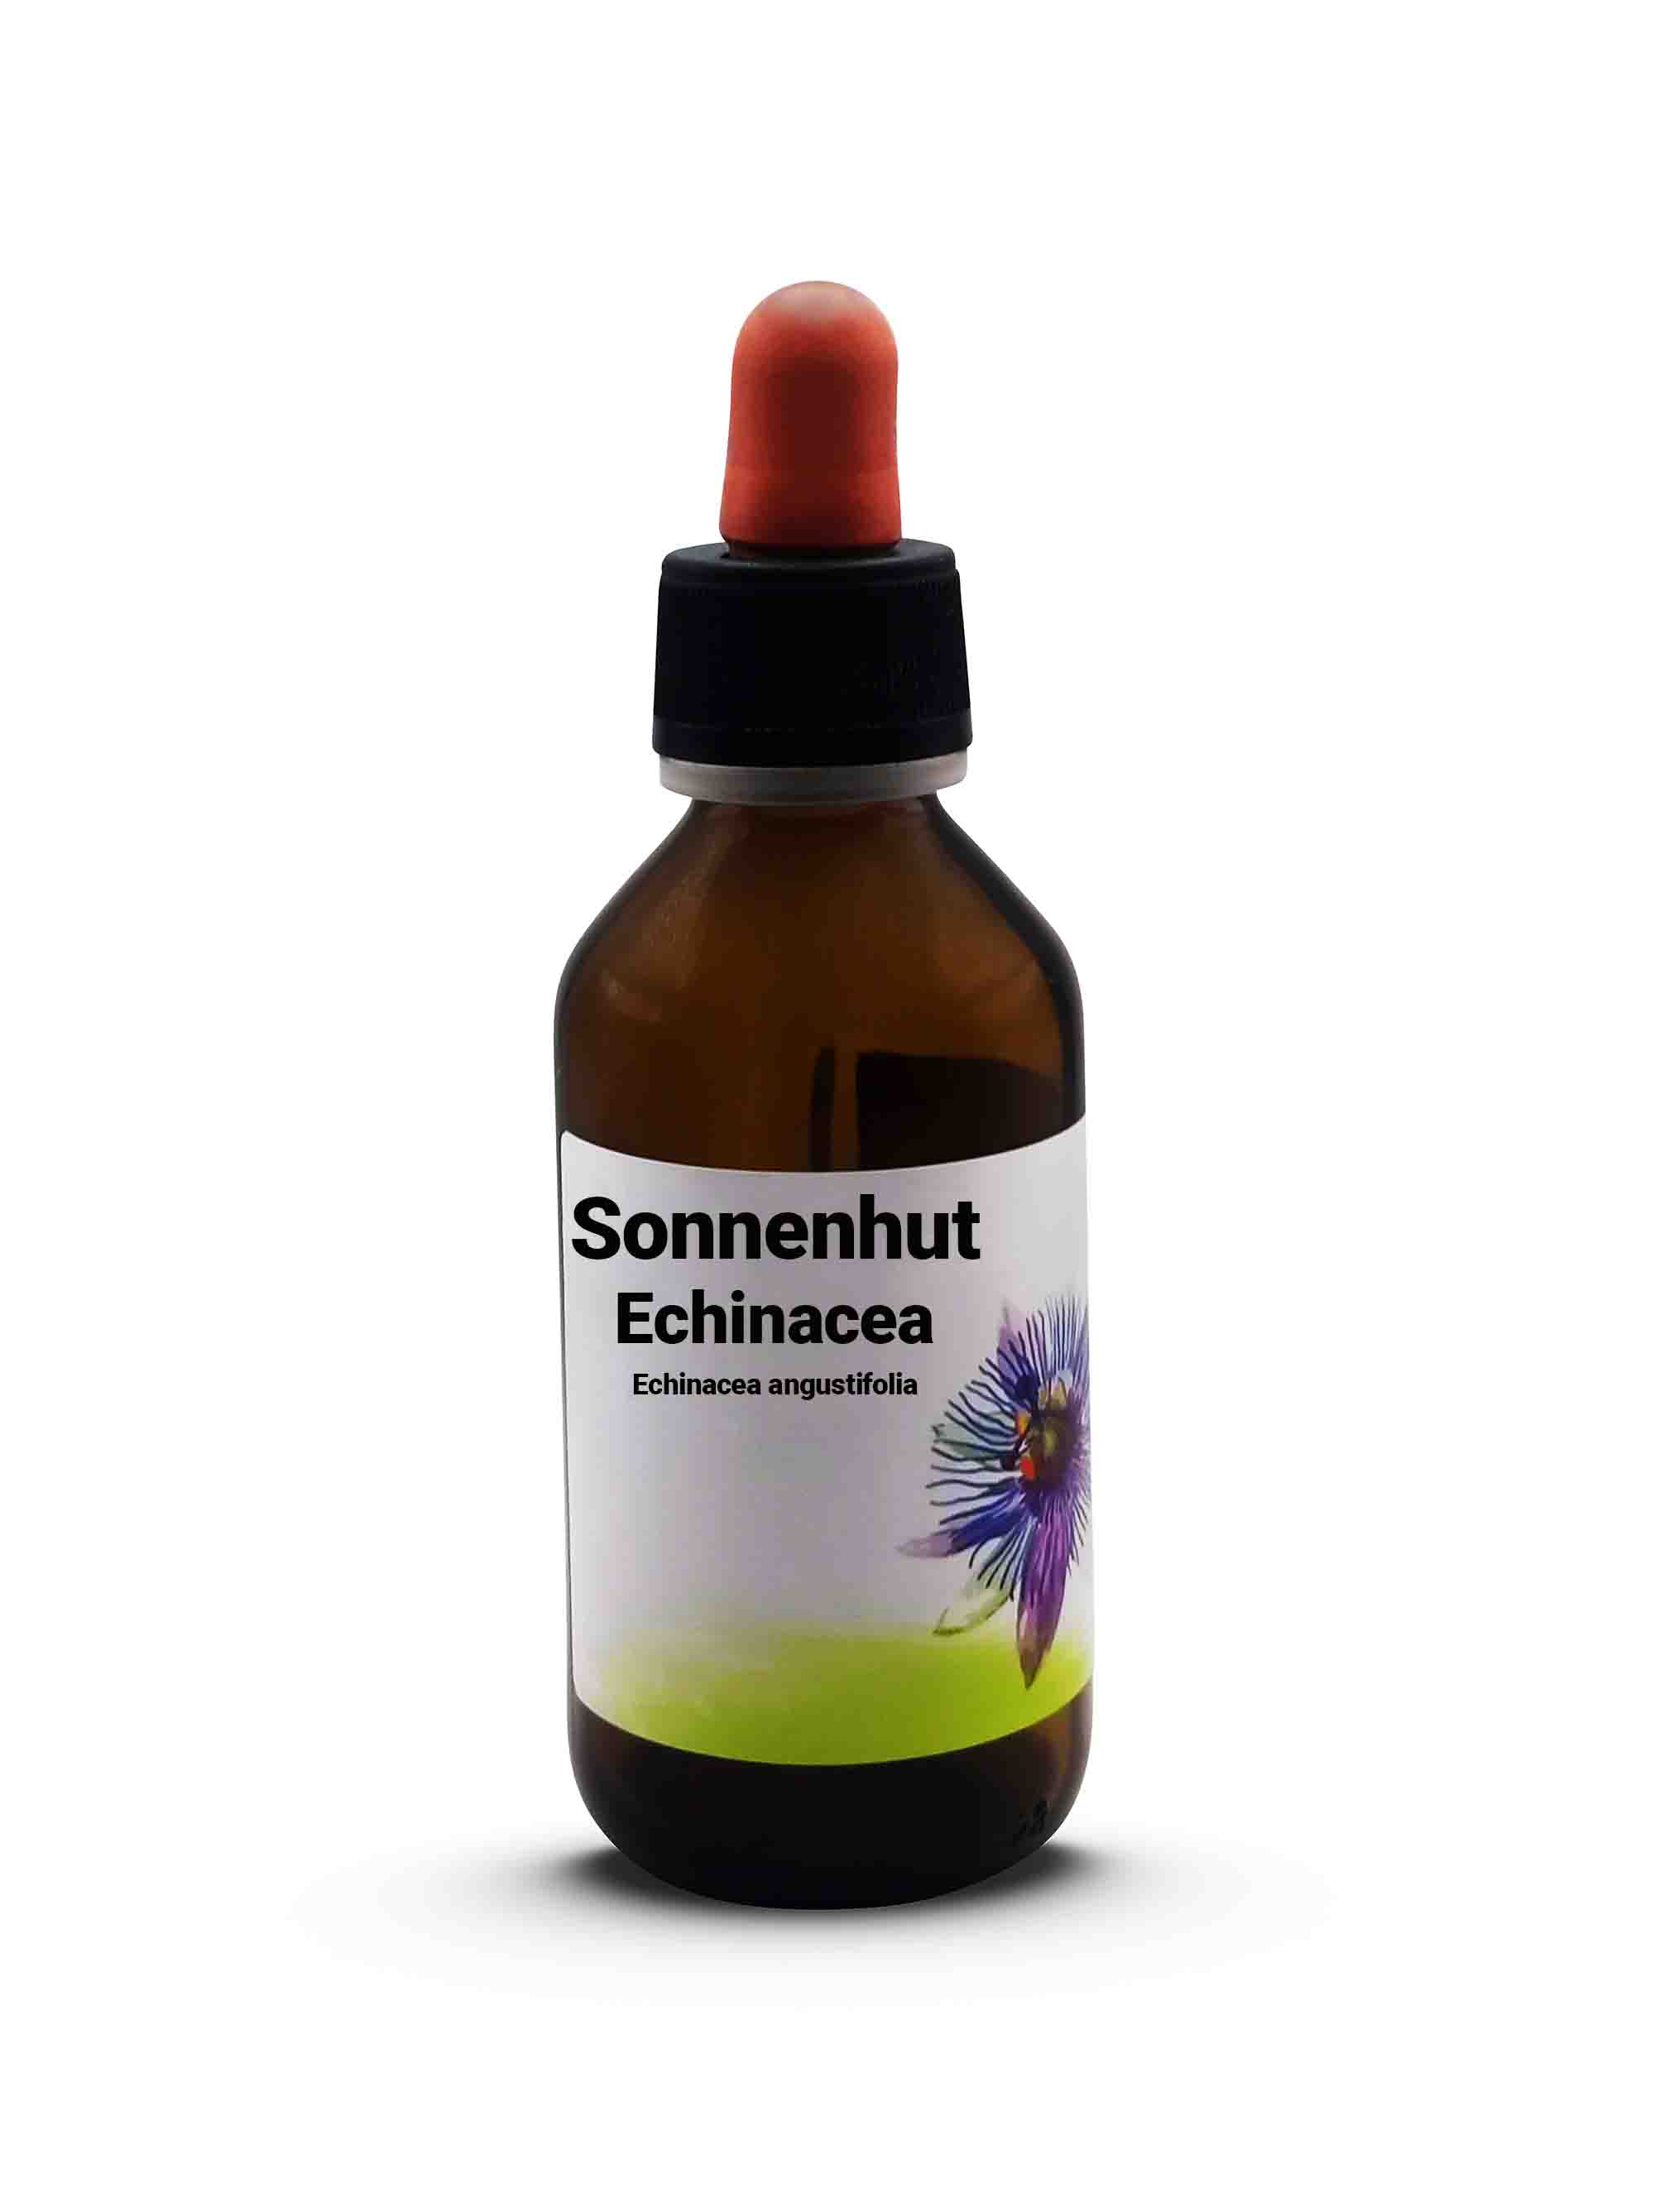 Sonnenhut Echinacea Echinacea angustifolia 100 ml